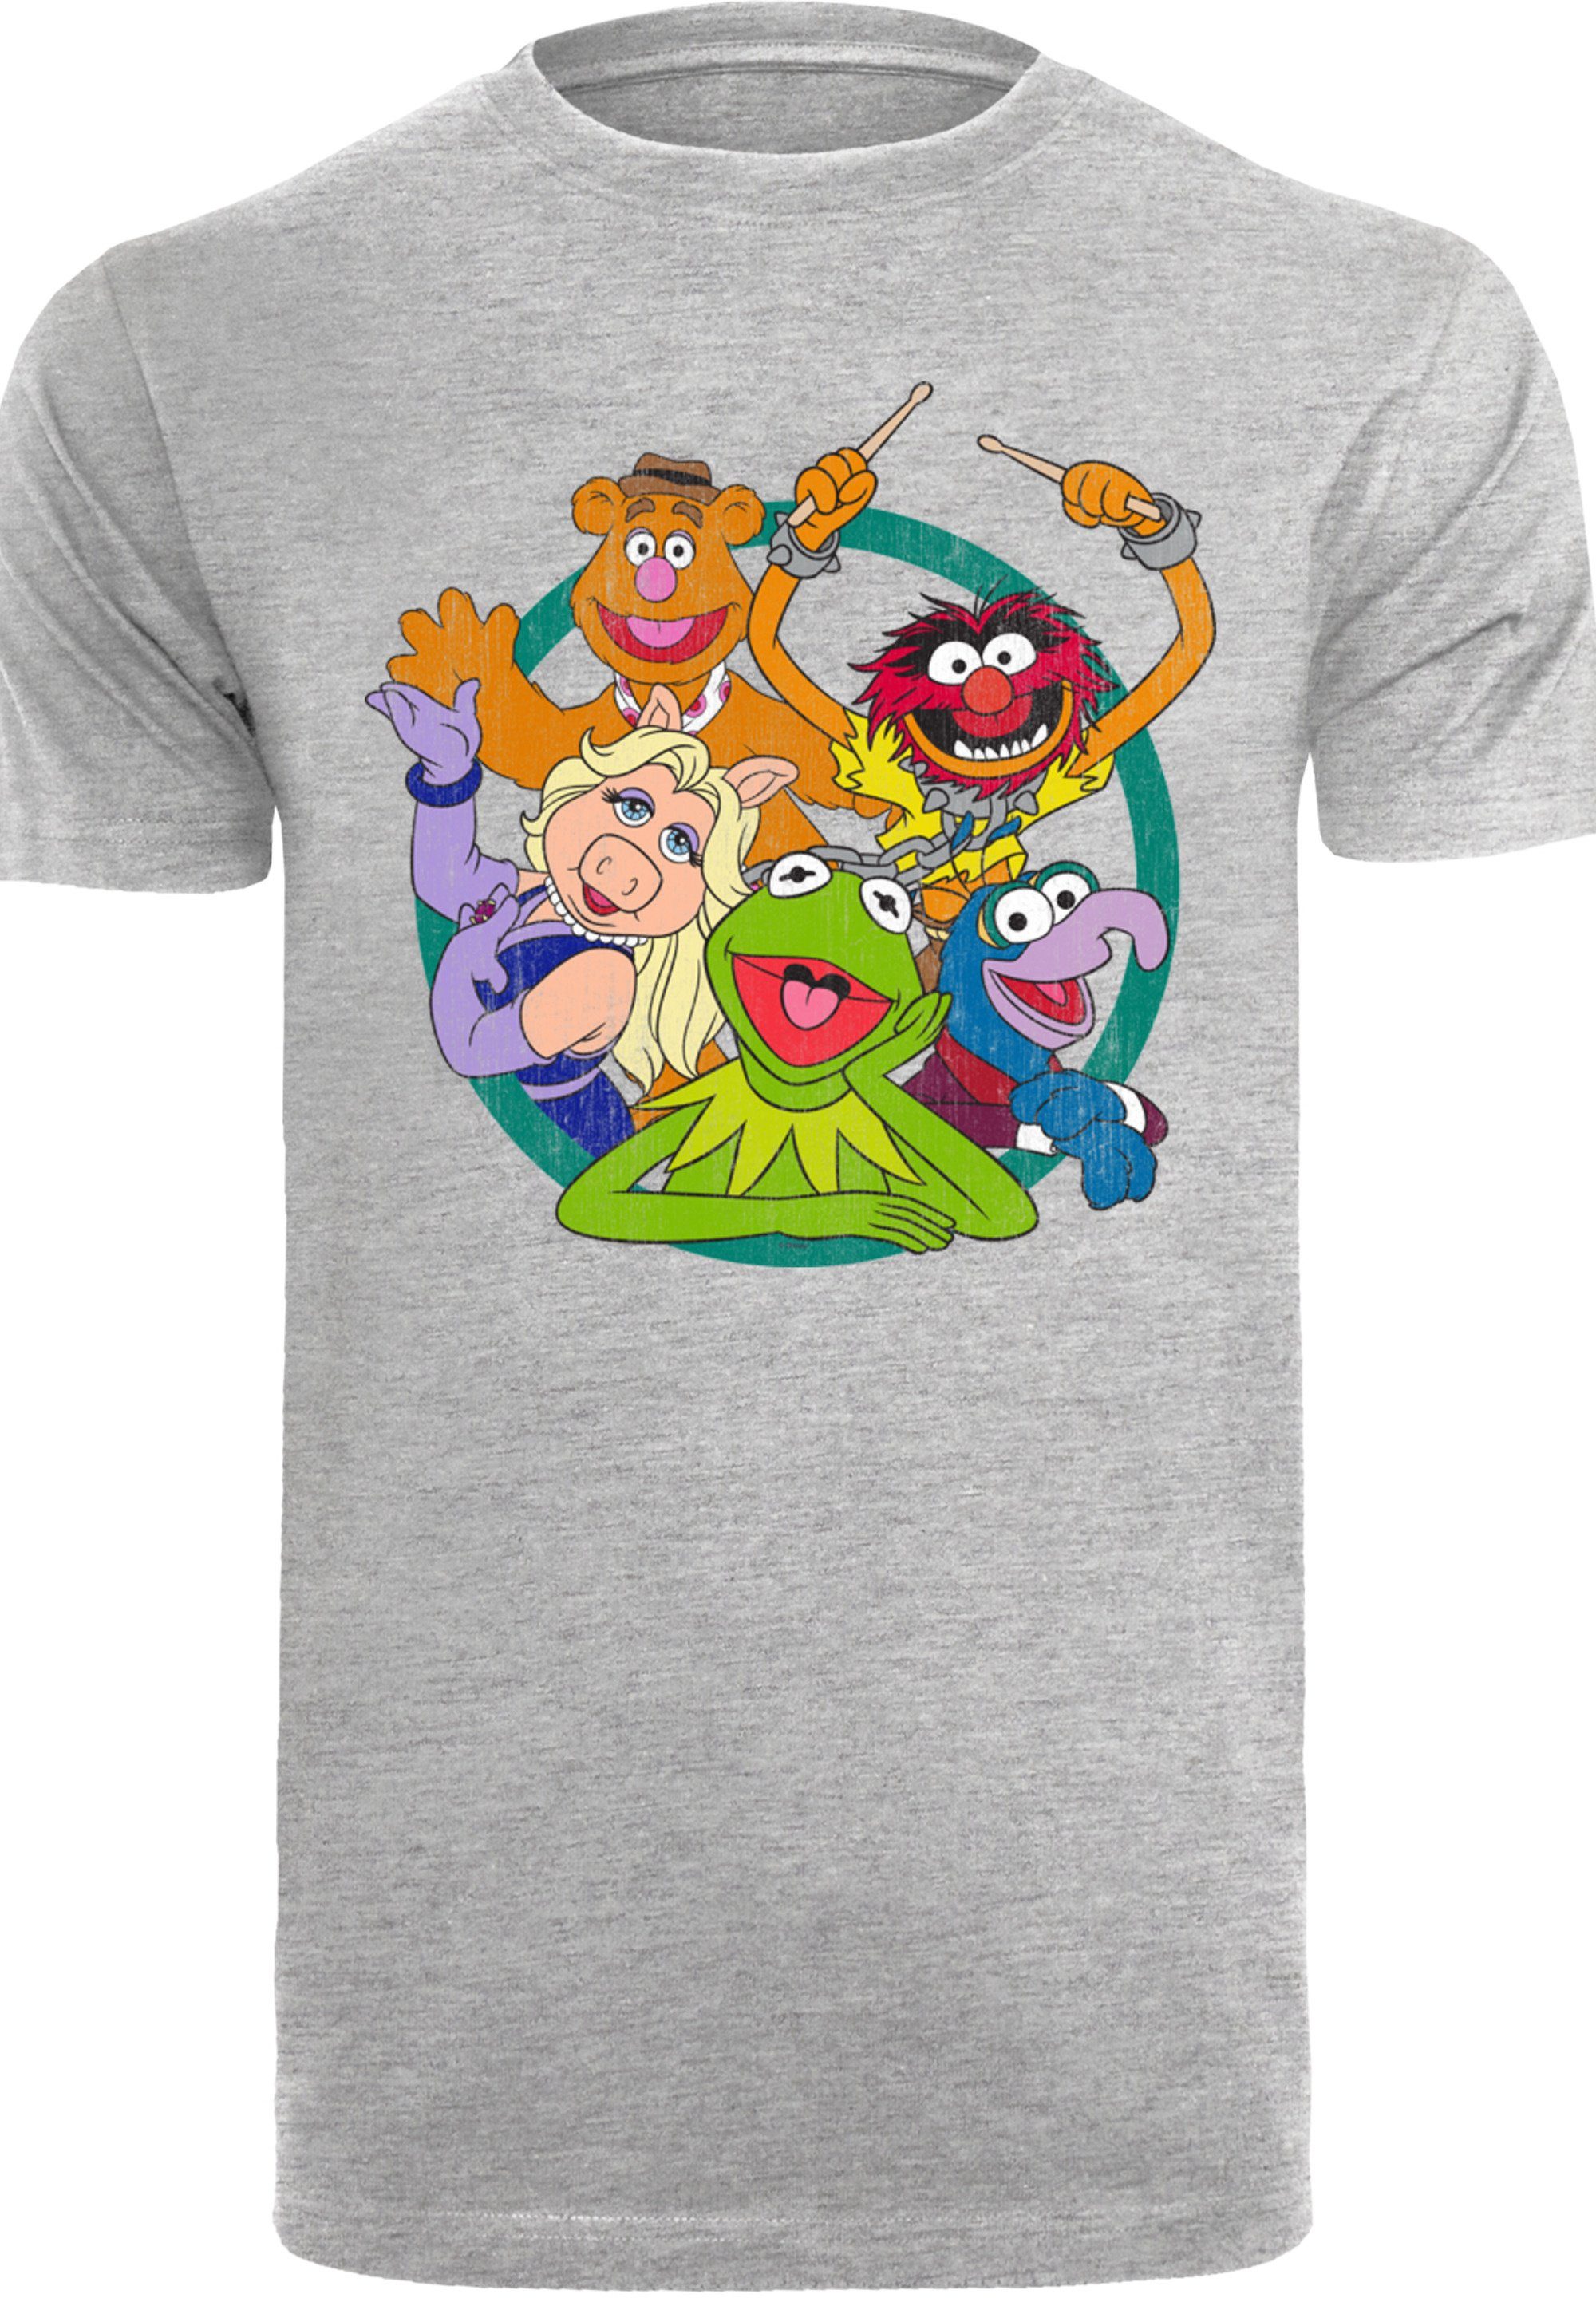 F4NT4STIC T-Shirt heather Muppets Die Circle grey Group Print Disney